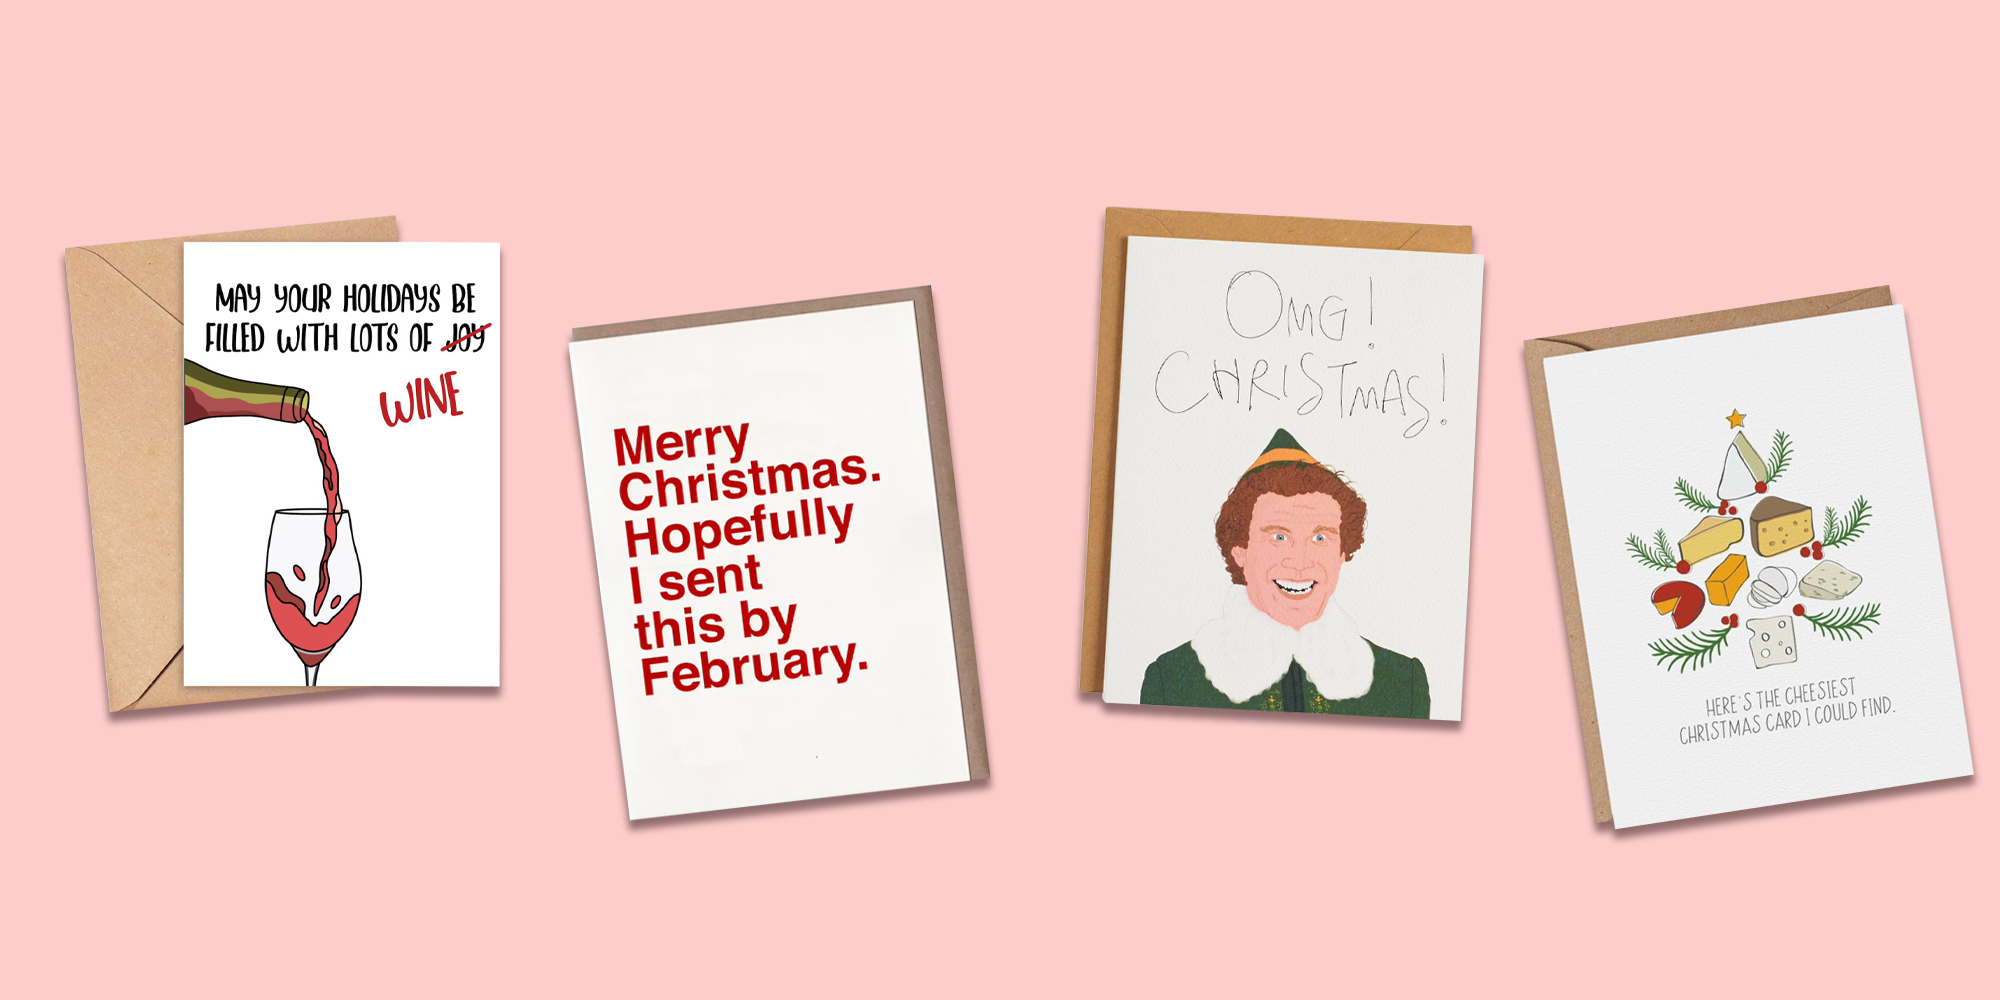 Funny Family Christmas Greeting Card Humour Comedy Joke Gift Partner Friend Fun 